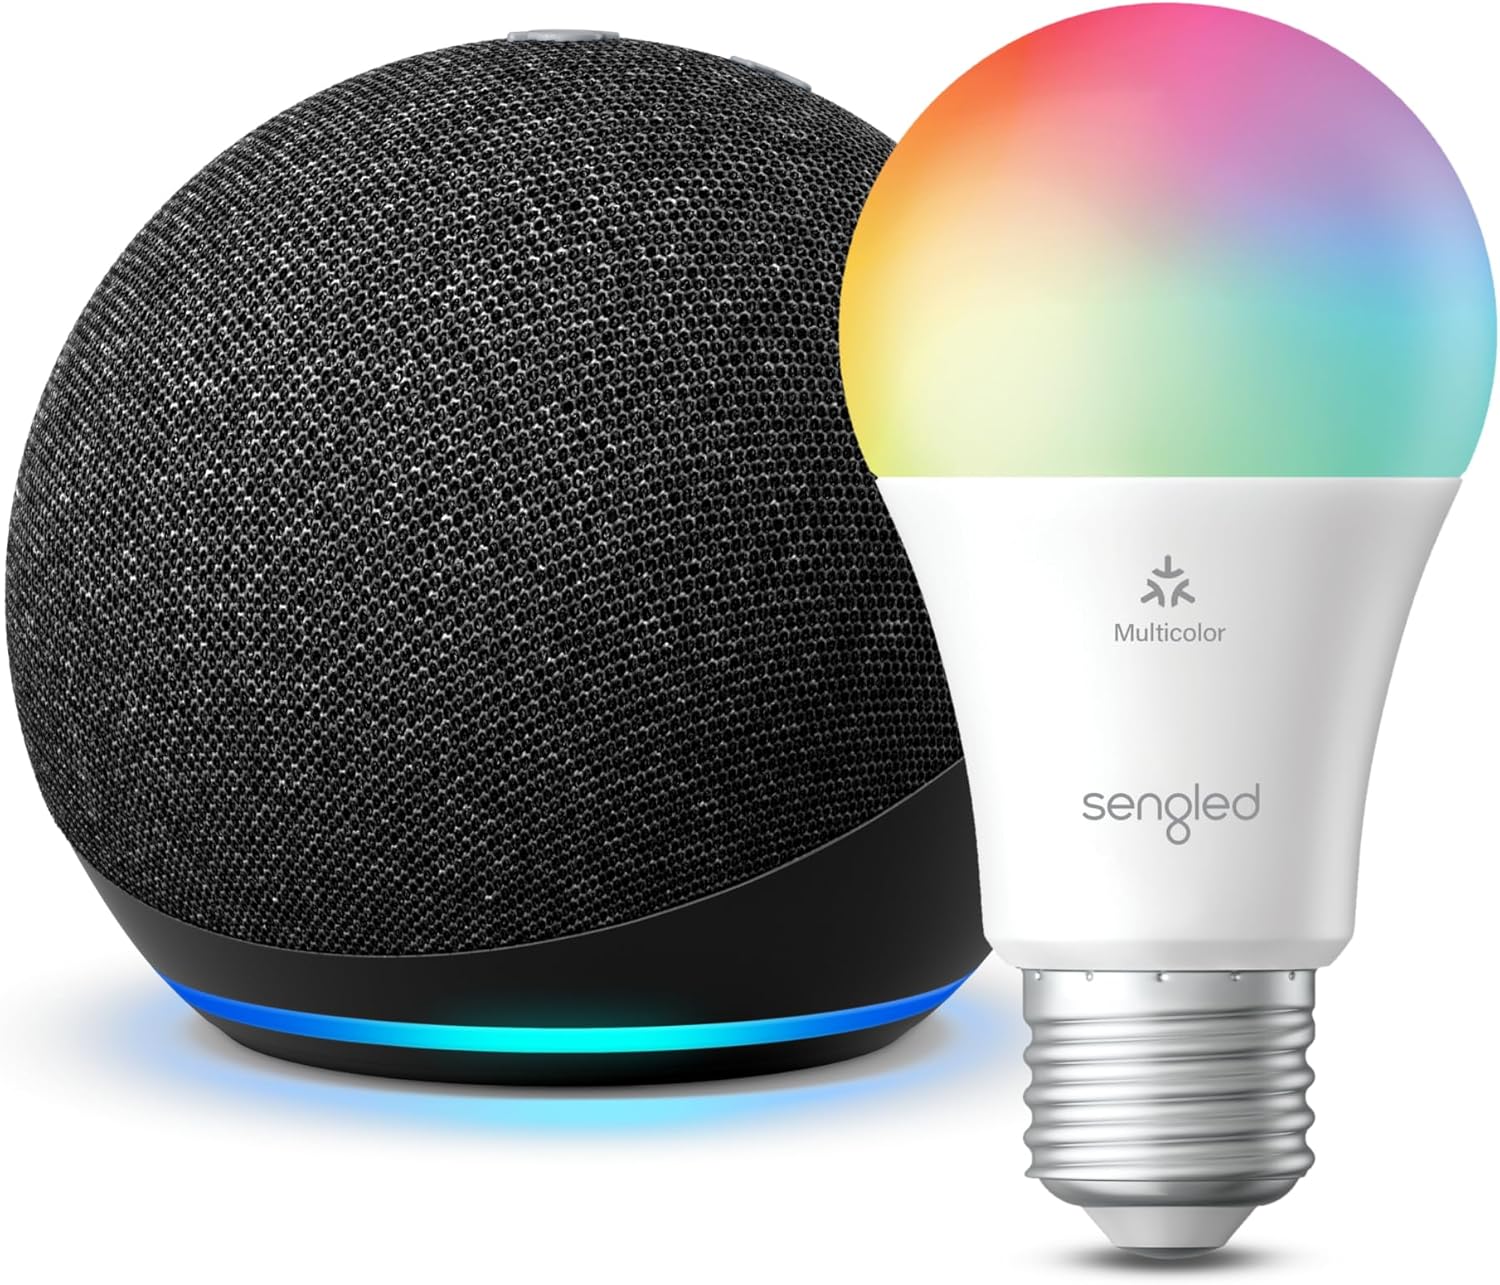 The Amazon Echo Dot (5th Gen) and Sengled Smart Color Bulb.